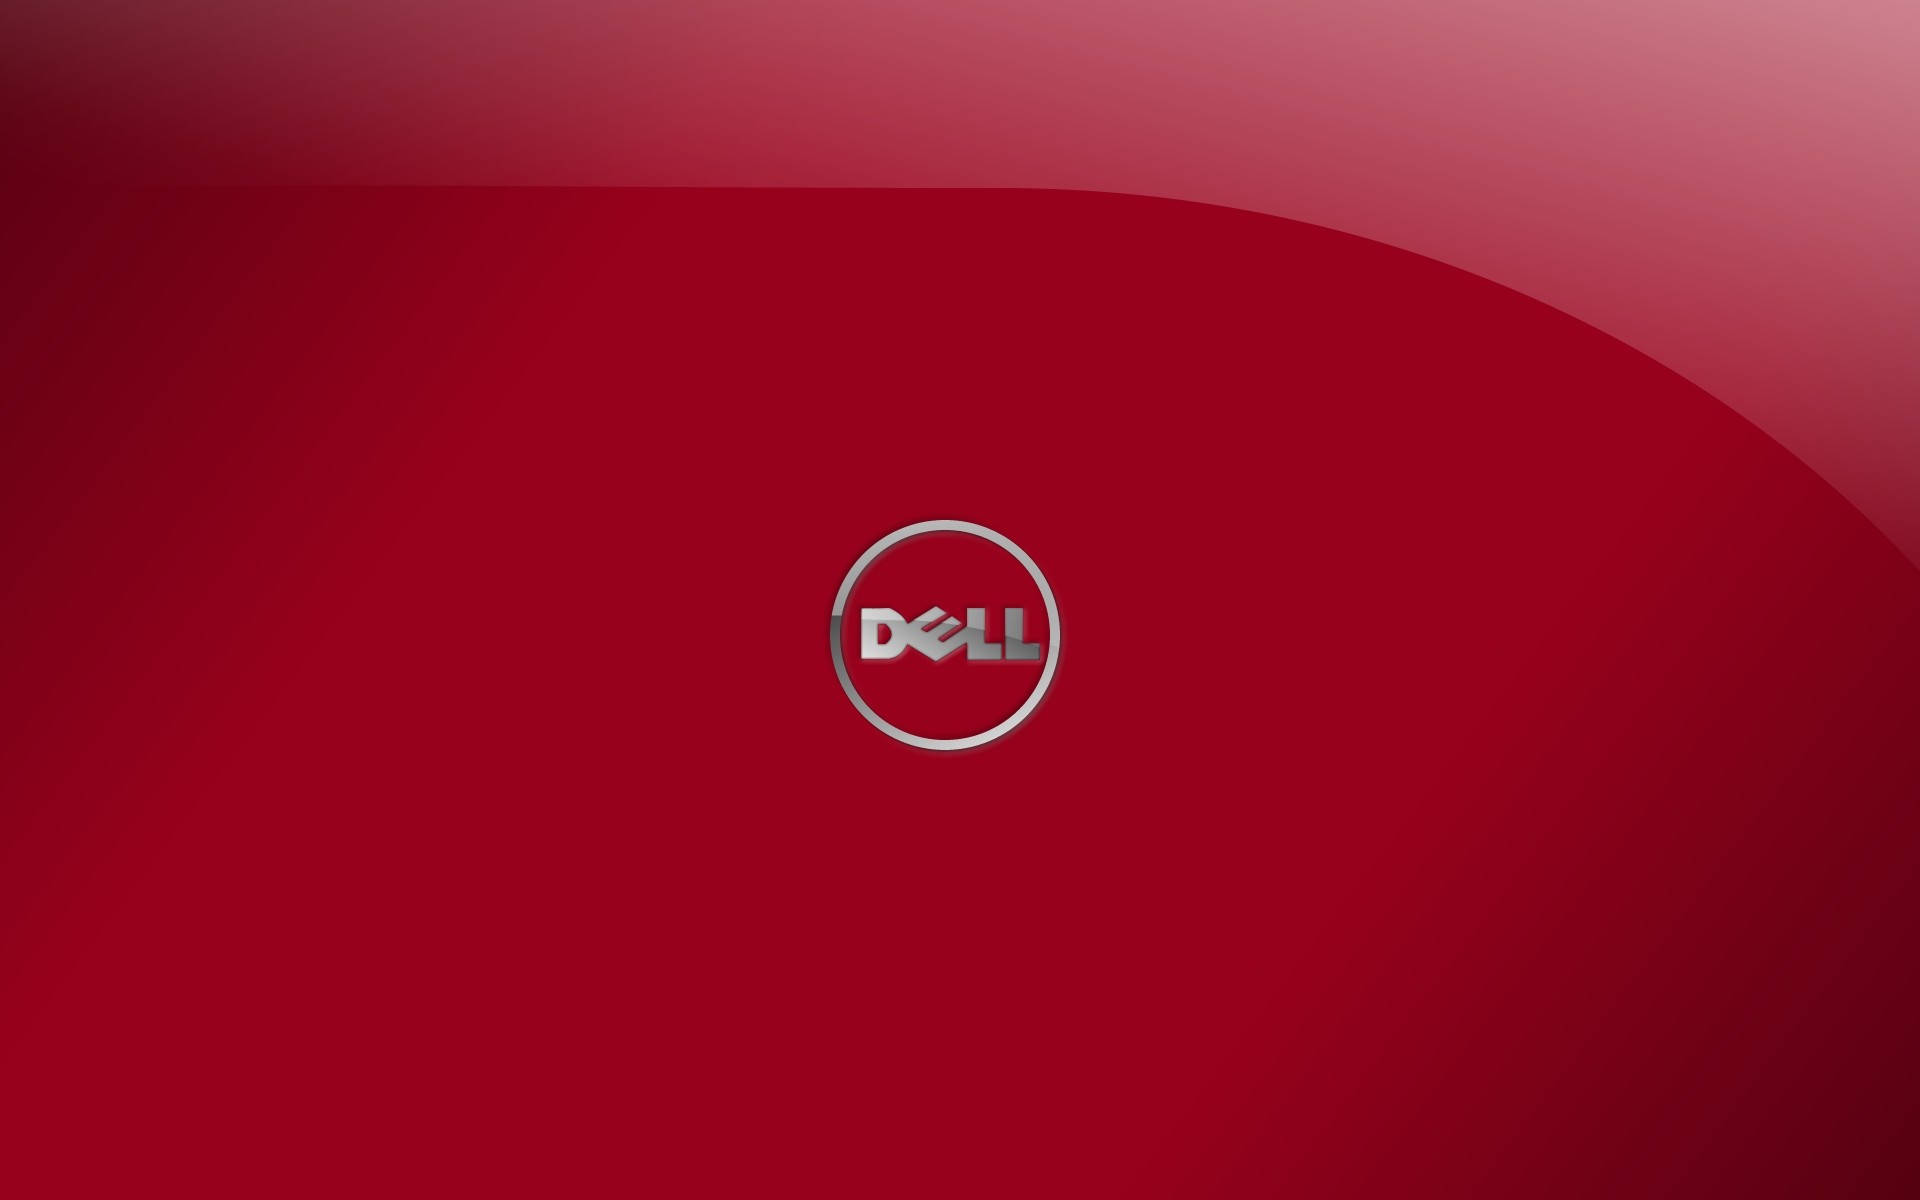 Dell Hd Logo On Laptop Wallpaper